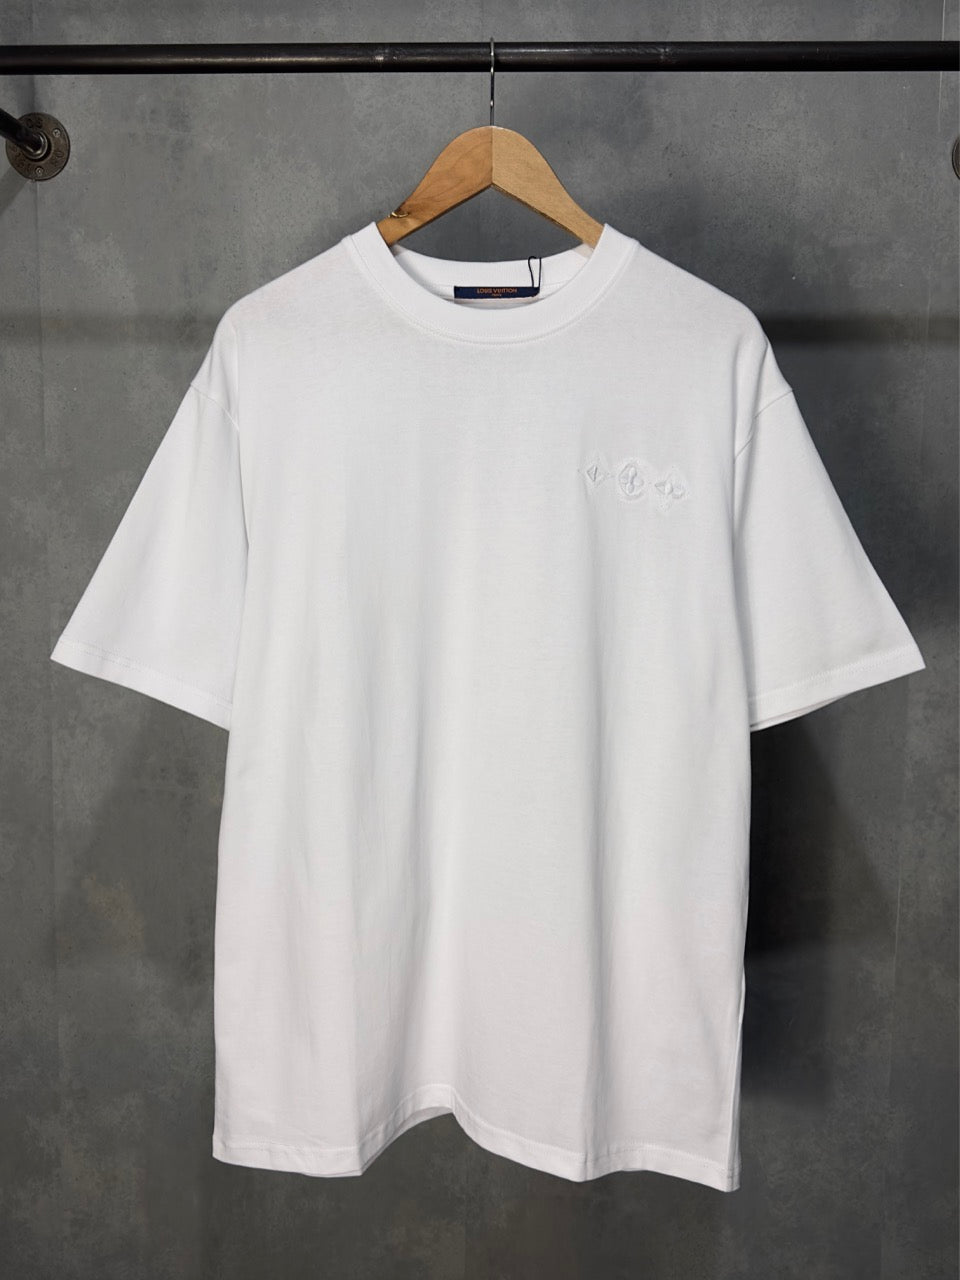 Louis Vuitton T-Shirt (White/Embroid)